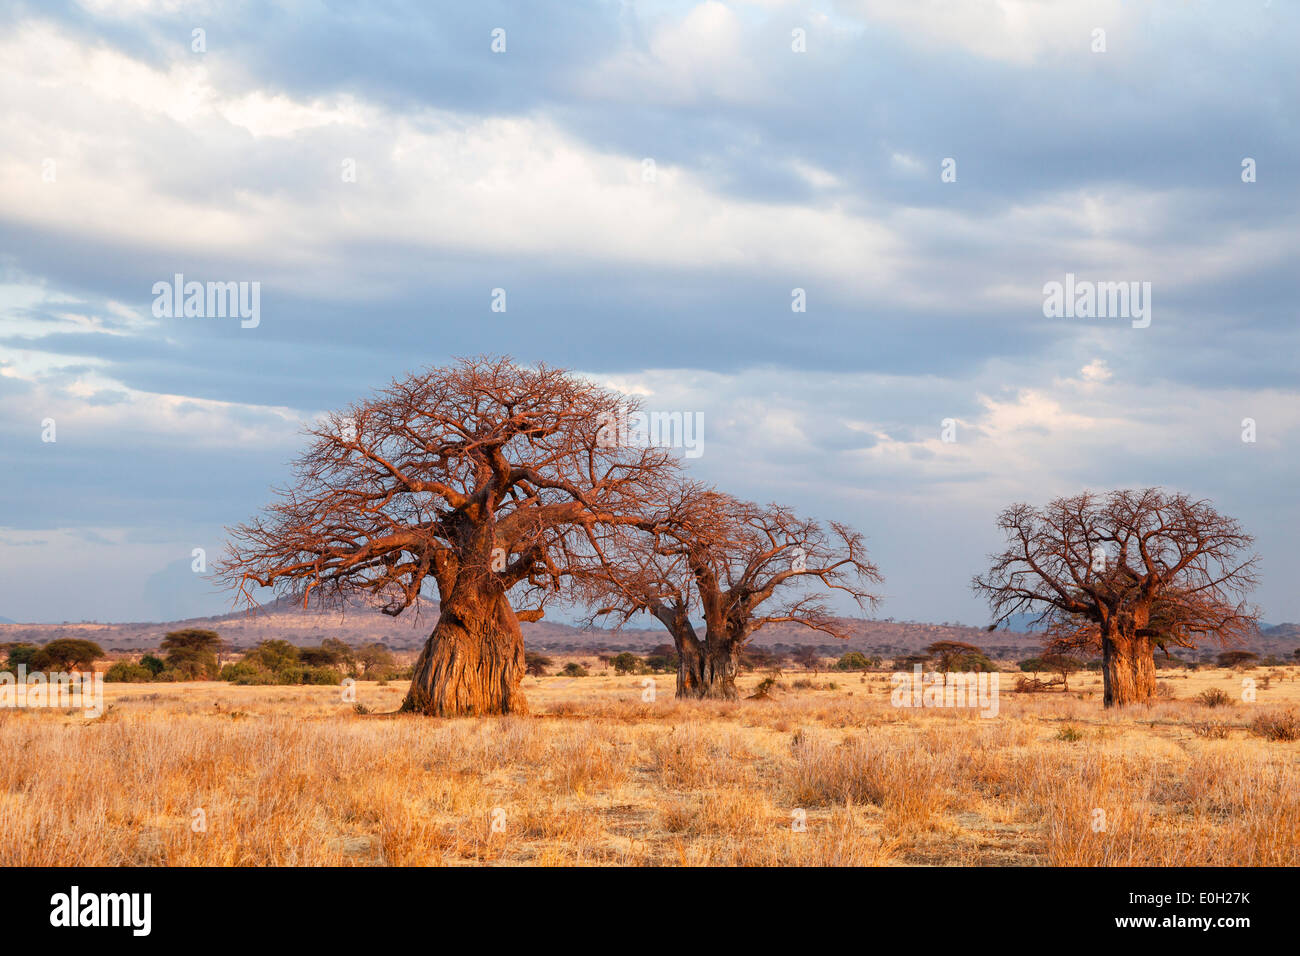 African Baobabs at sunset, Adansonia digitata, Ruaha National Park, Tanzania, Africa Stock Photo